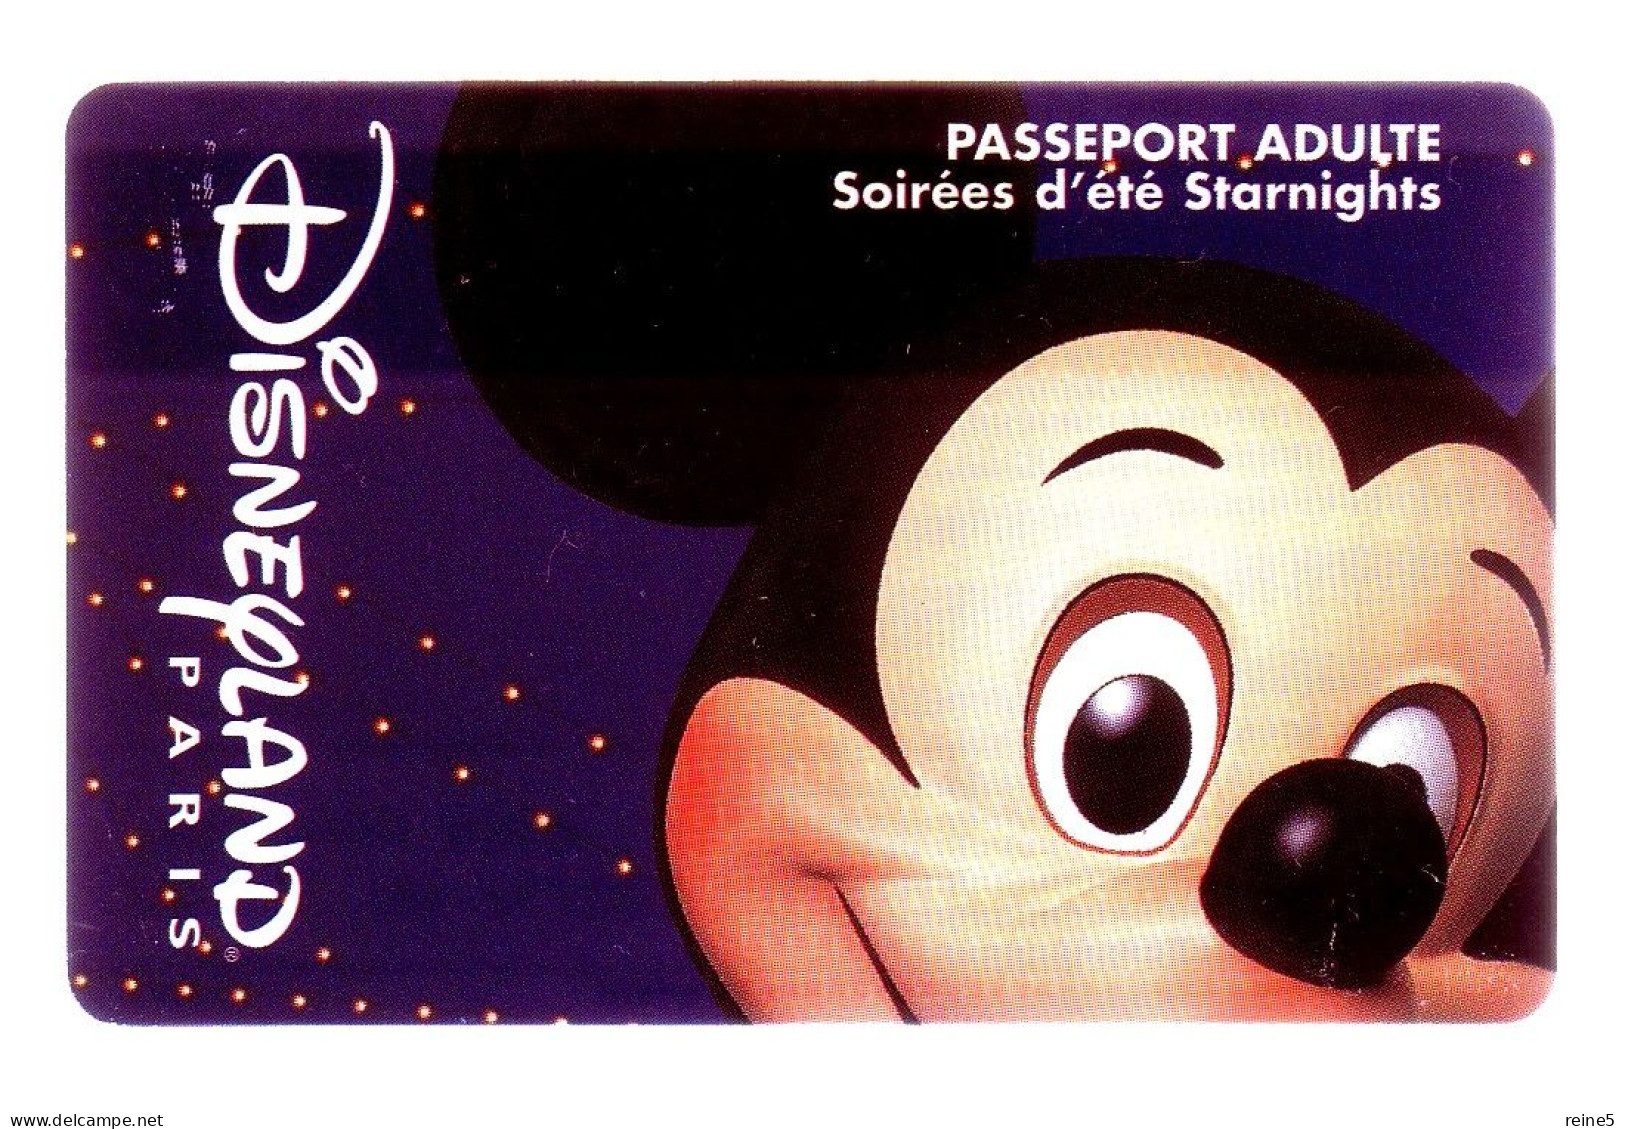 PASSEPORT ADULTE MICKEY SOIREES D'ETE STARNIGHTS DISNEYLAND PARIS -TRES BON ETAT -REF-PASS DISNEY-14 - Pasaportes Disney